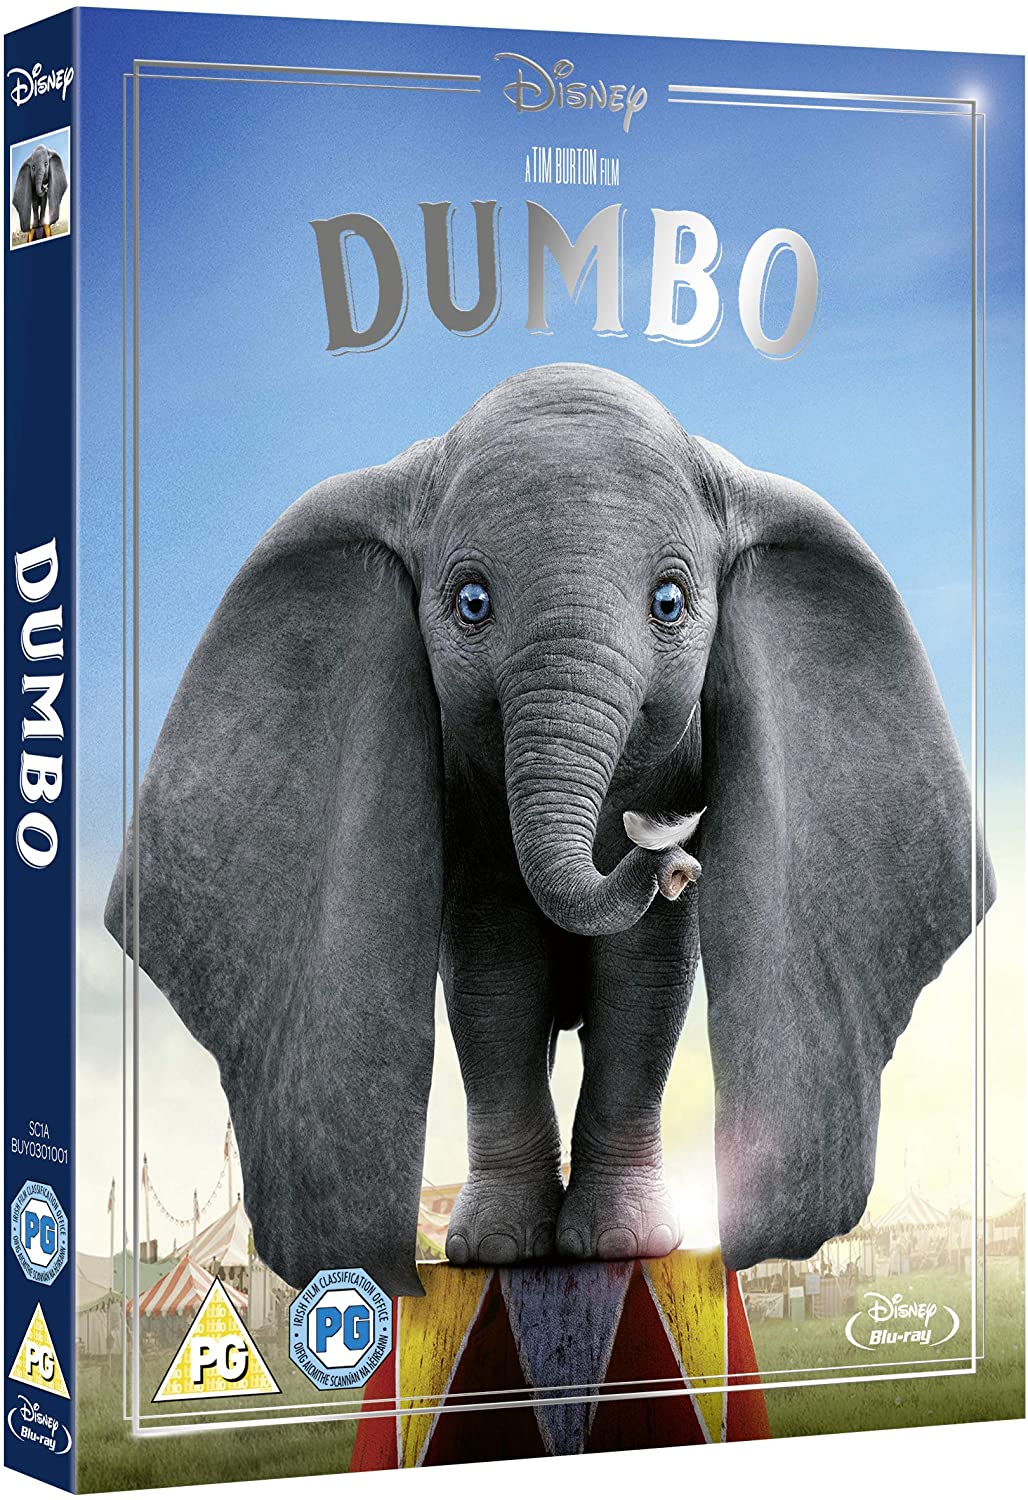 Disney's Dumbo - Family/Musical [Blu-Ray]